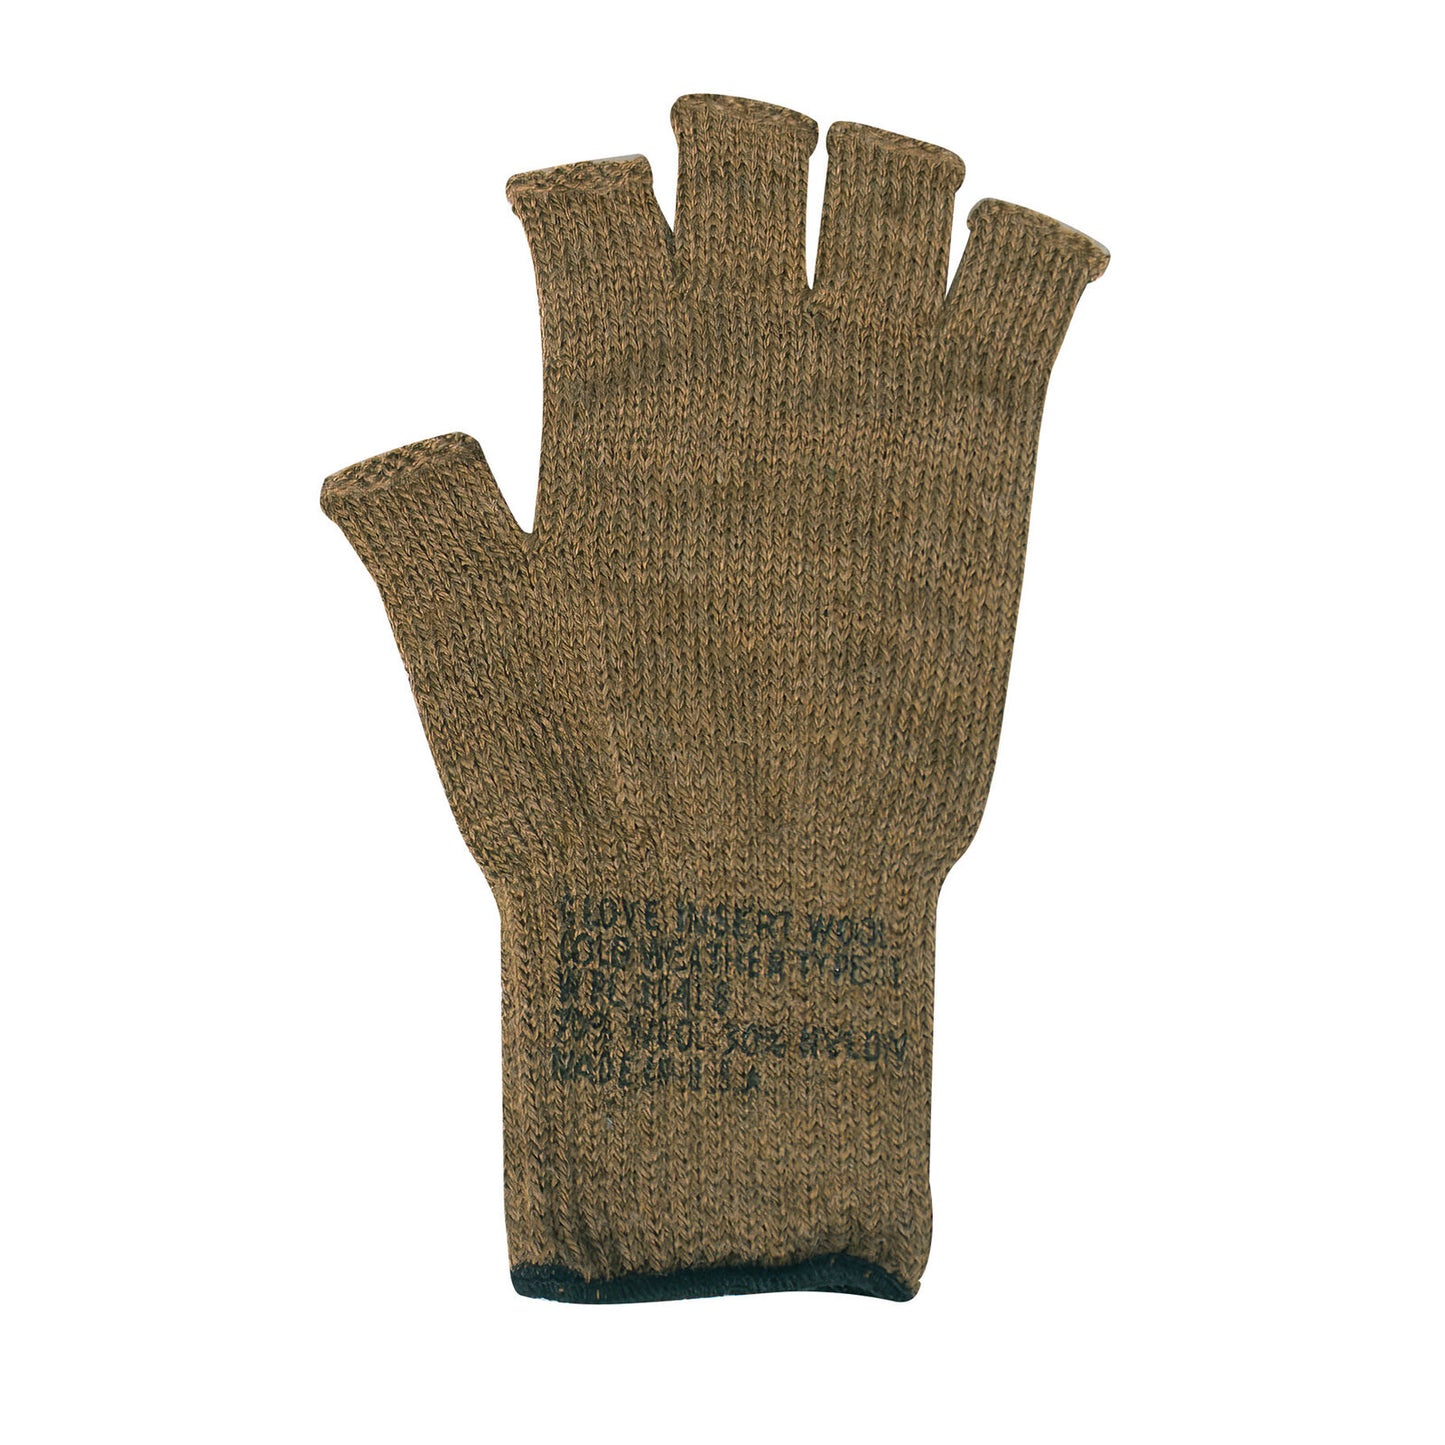 Coyote Brown Fingerless Wool Blend Gloves Adult Unisex Ambidextrous Winter Glove